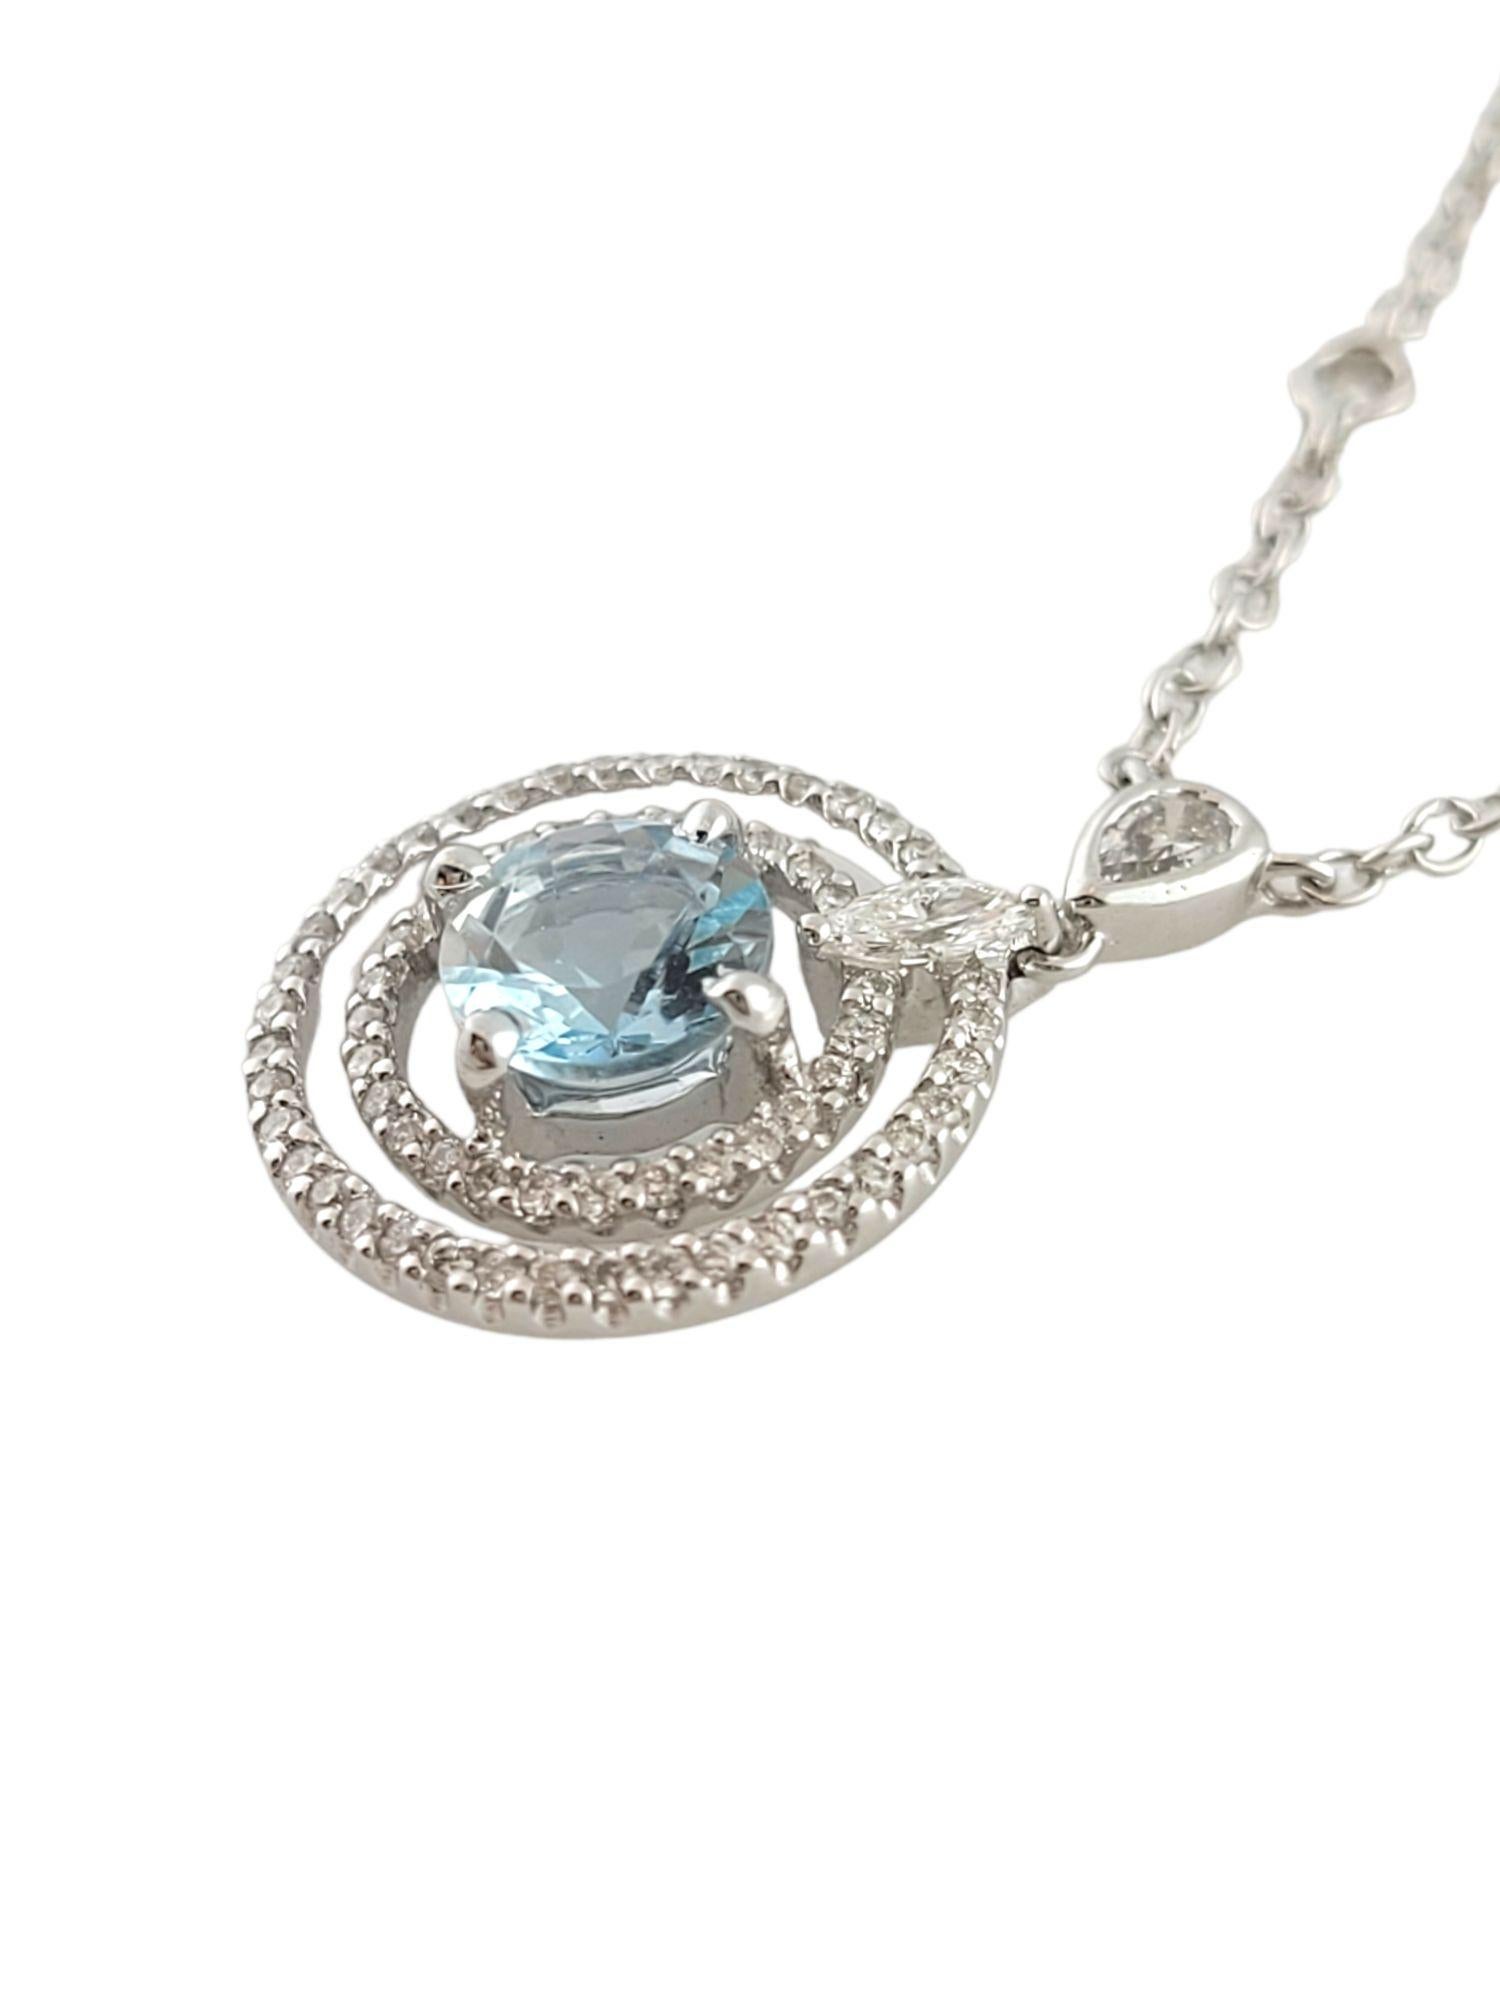 Round Cut 18K White Gold Aquamarine and Diamond Pendant Necklace #14748 For Sale